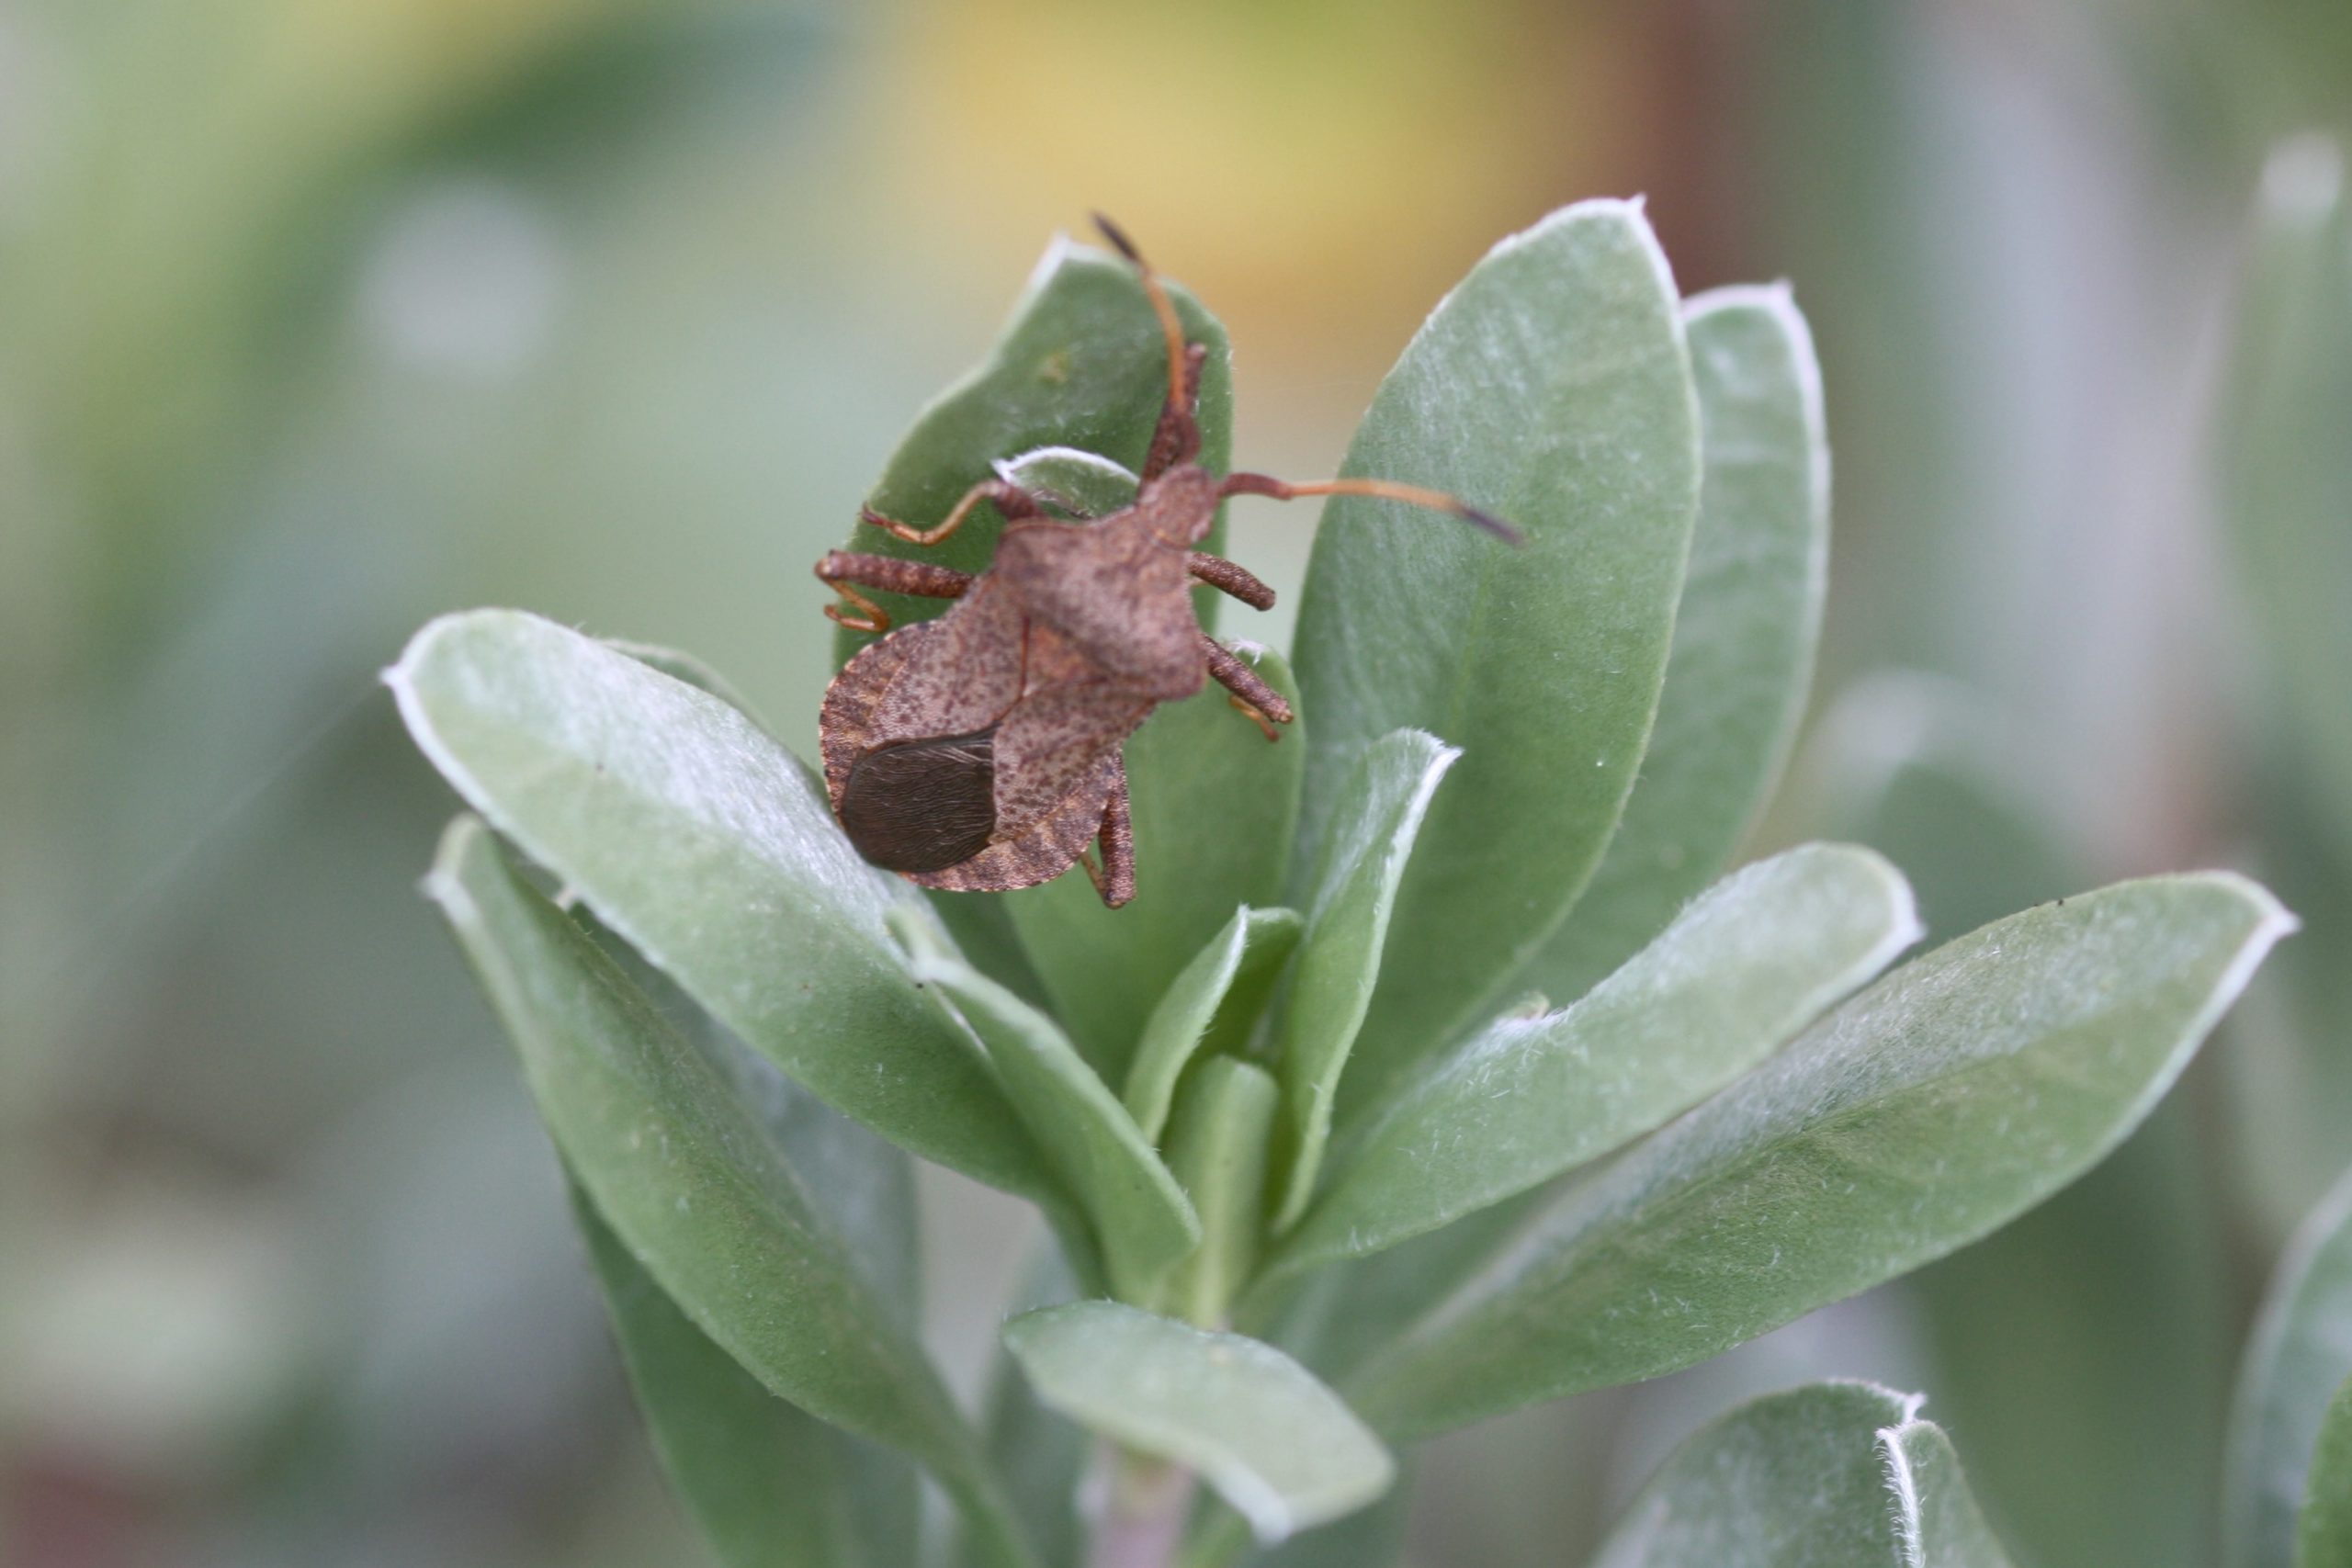 Squash bug or Dock bug, Coreus marginatus